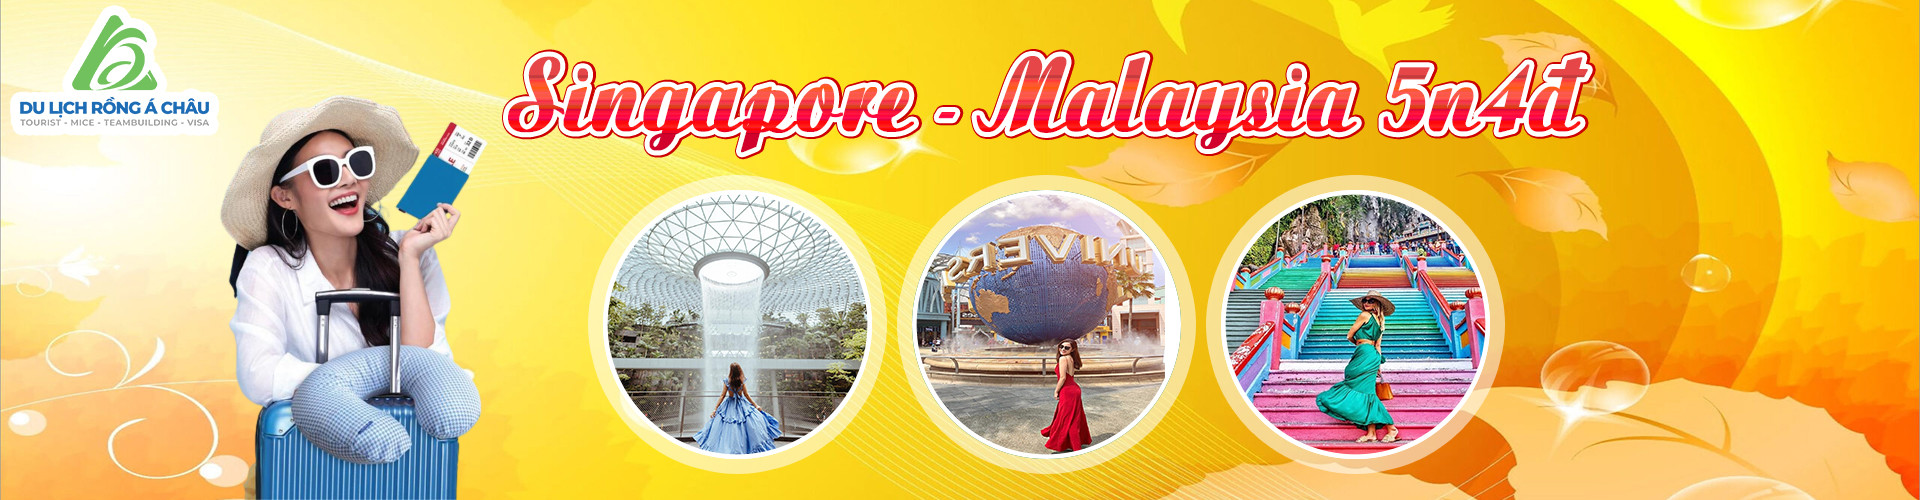 Tour Singapore - Malaysia 5n4d